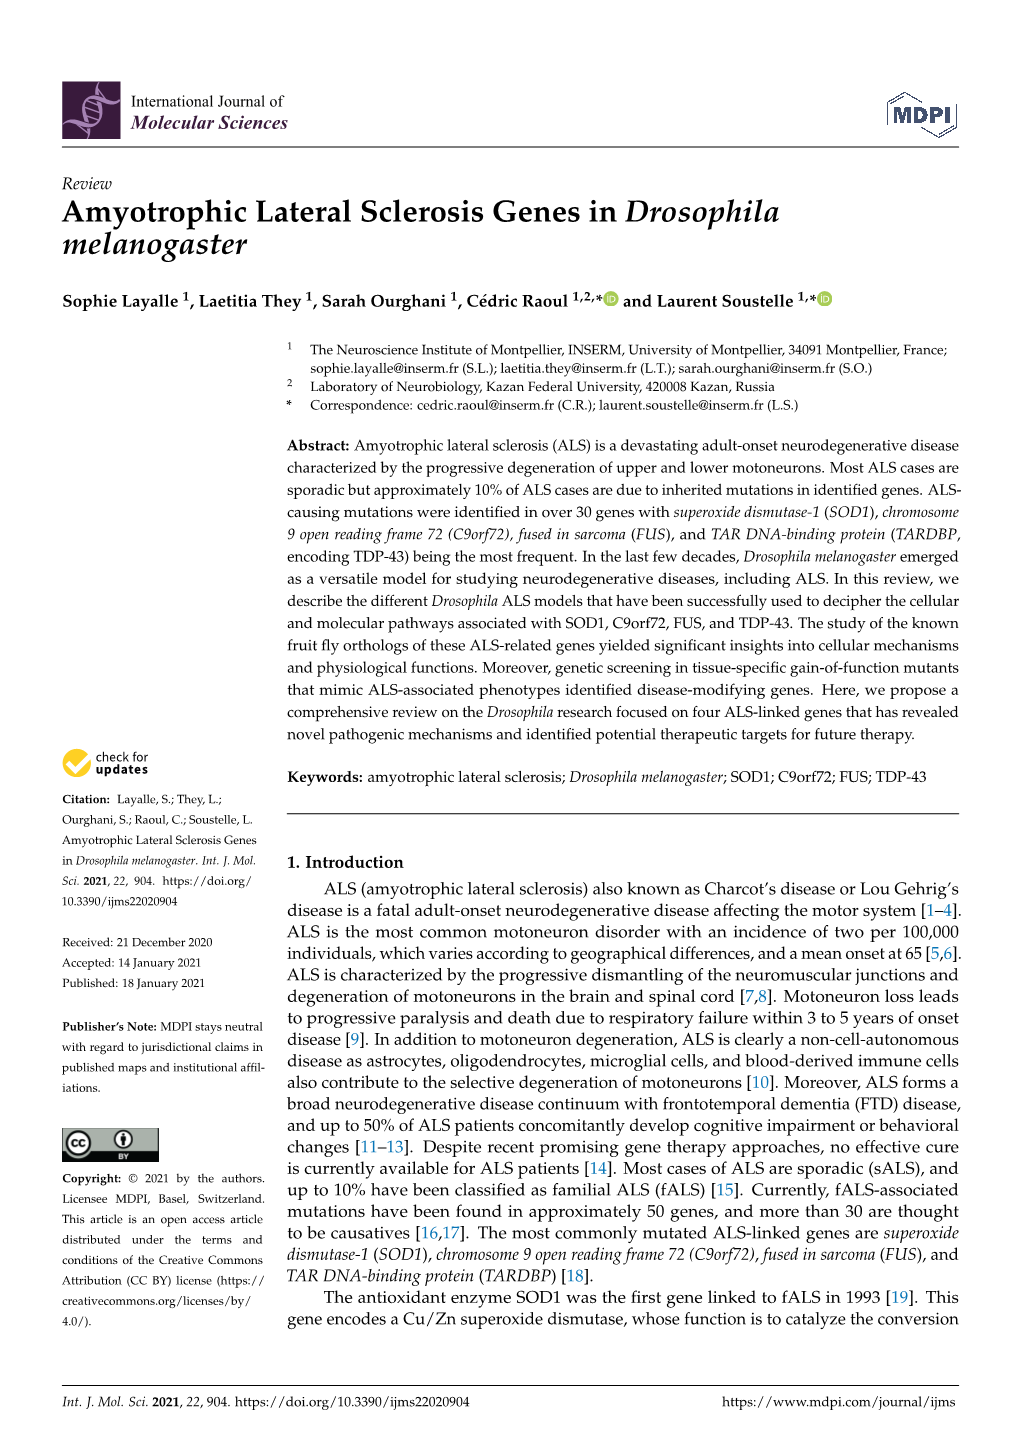 Amyotrophic Lateral Sclerosis Genes in Drosophila Melanogaster